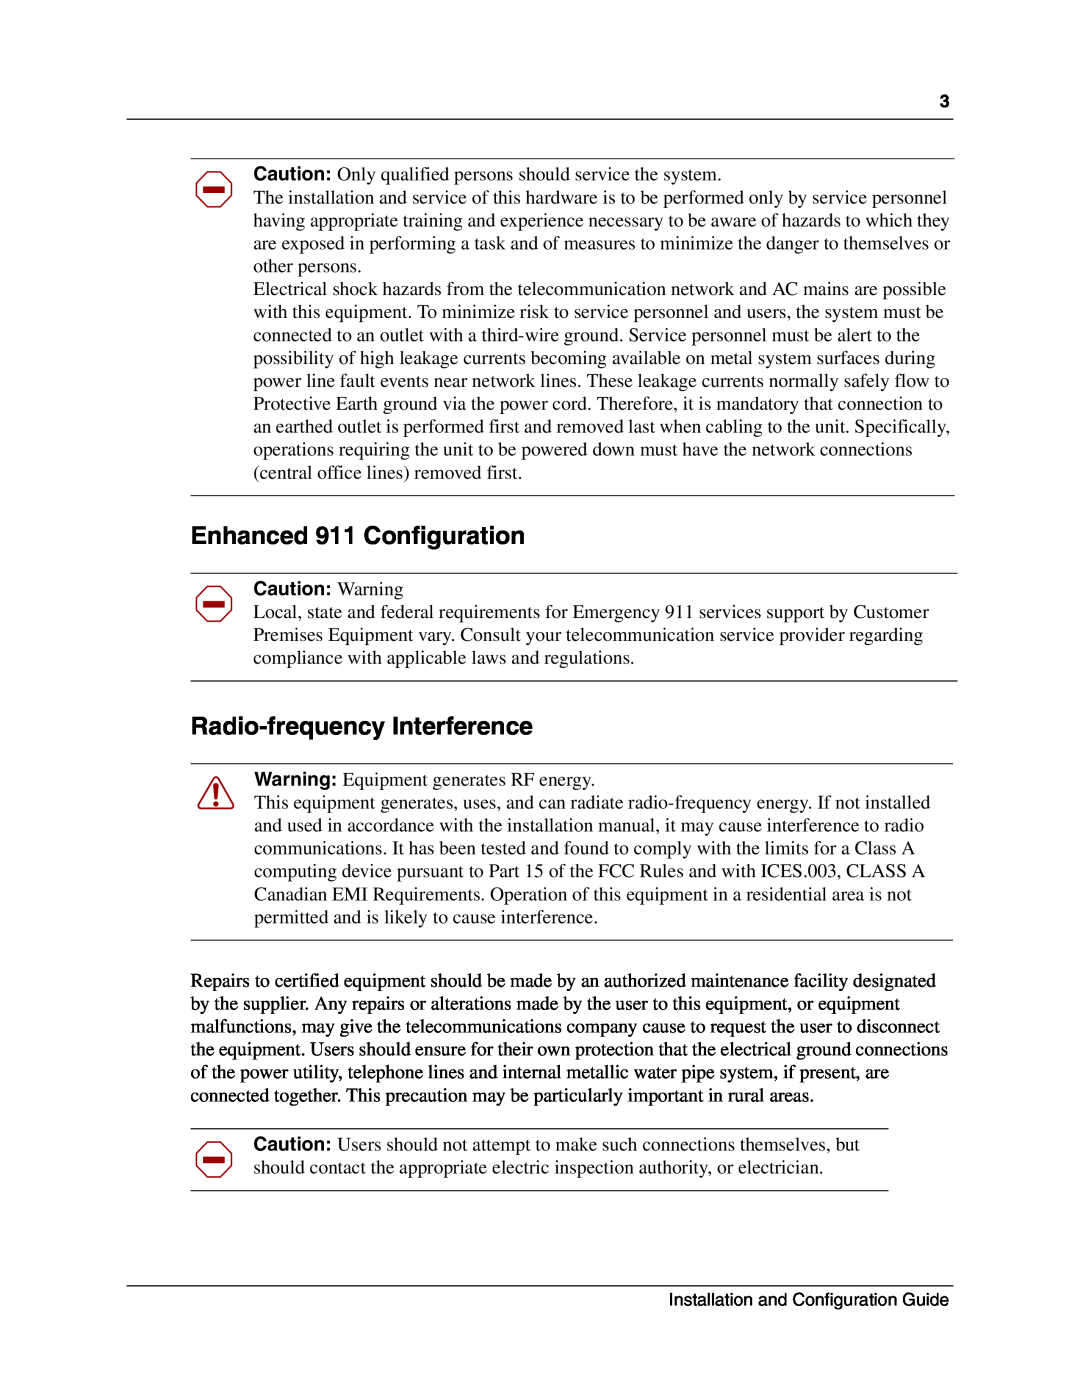 Nortel Networks MOG6xx, MOG7xx manual Enhanced 911 Configuration, Radio-frequency Interference, Caution Warning 